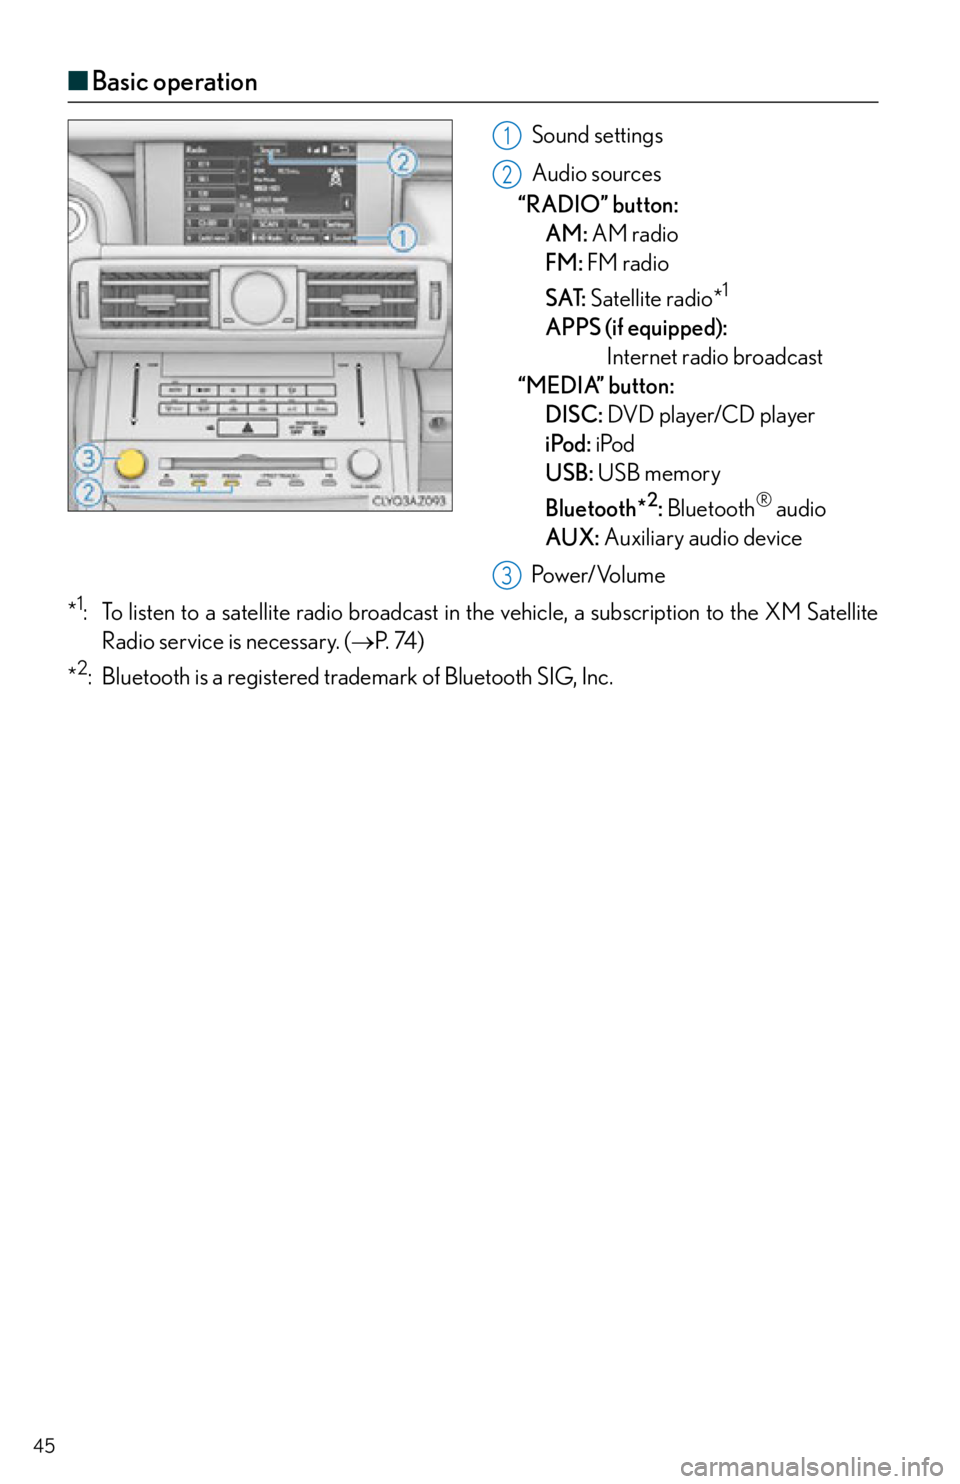 Lexus IS350 2015  Owners Manual / LEXUS 2015 IS250,IS350 OWNERS MANUAL QUICK GUIDE (OM53C80U) 45
■Basic operation
Sound settings
Audio sources
“RADIO” button: 
AM:  AM
 radio
FM: FM radio
SAT: Satellite radio*
1
APPS (if equipped):  
Internet radio broadcast
“MEDIA” button: 
DISC: